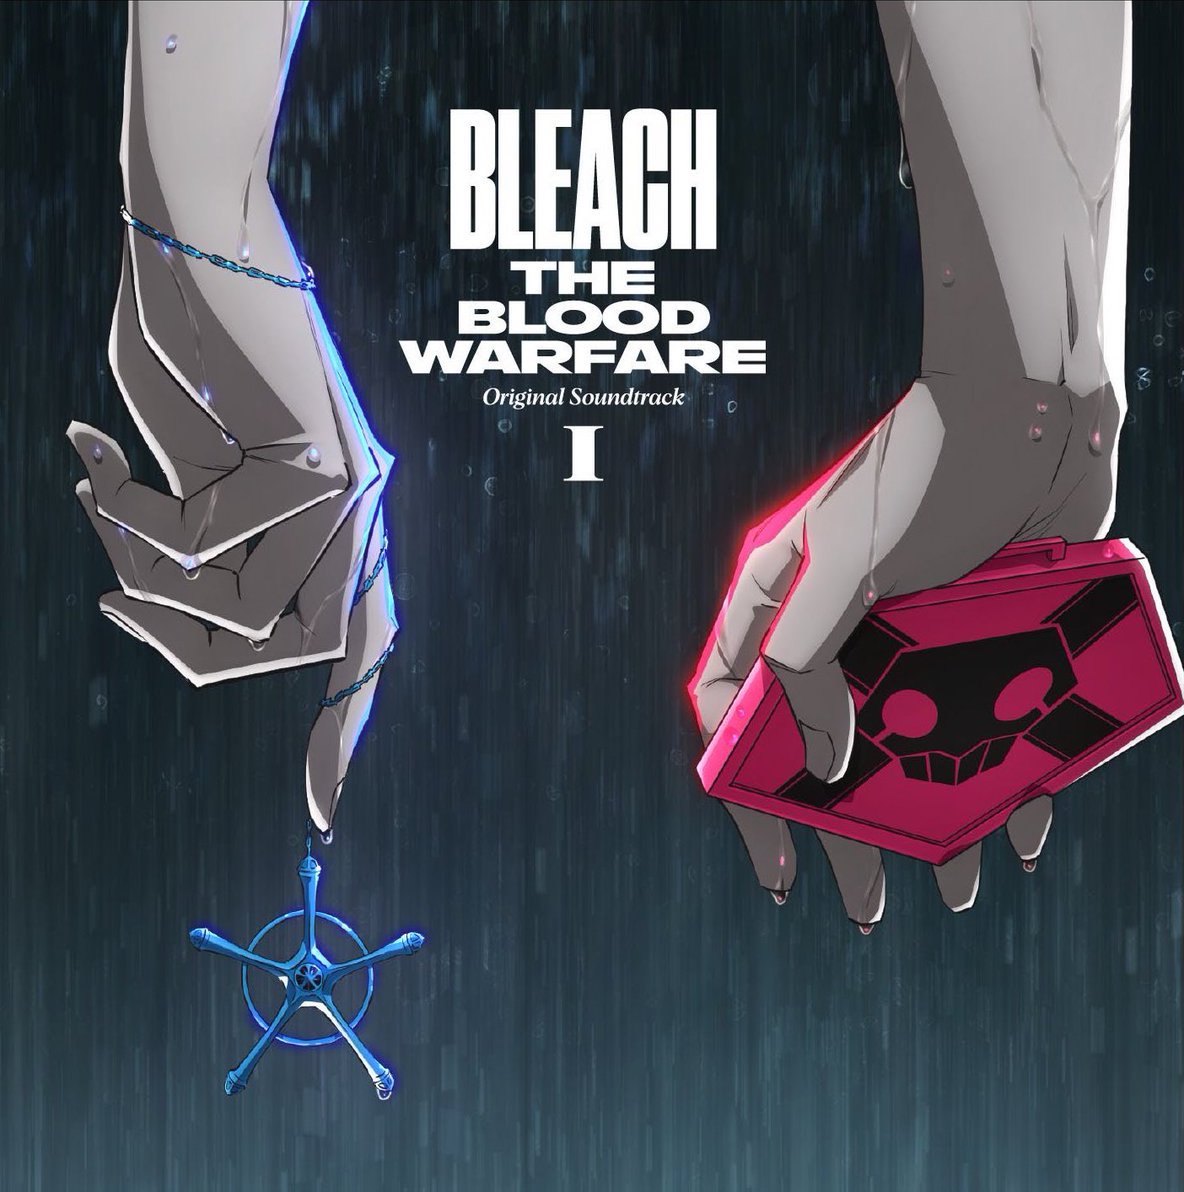 Bleach: The Blood Warfare Soundtrack I (by Shiro Sagisu) -- Seeders: 4 -- Leechers: 0